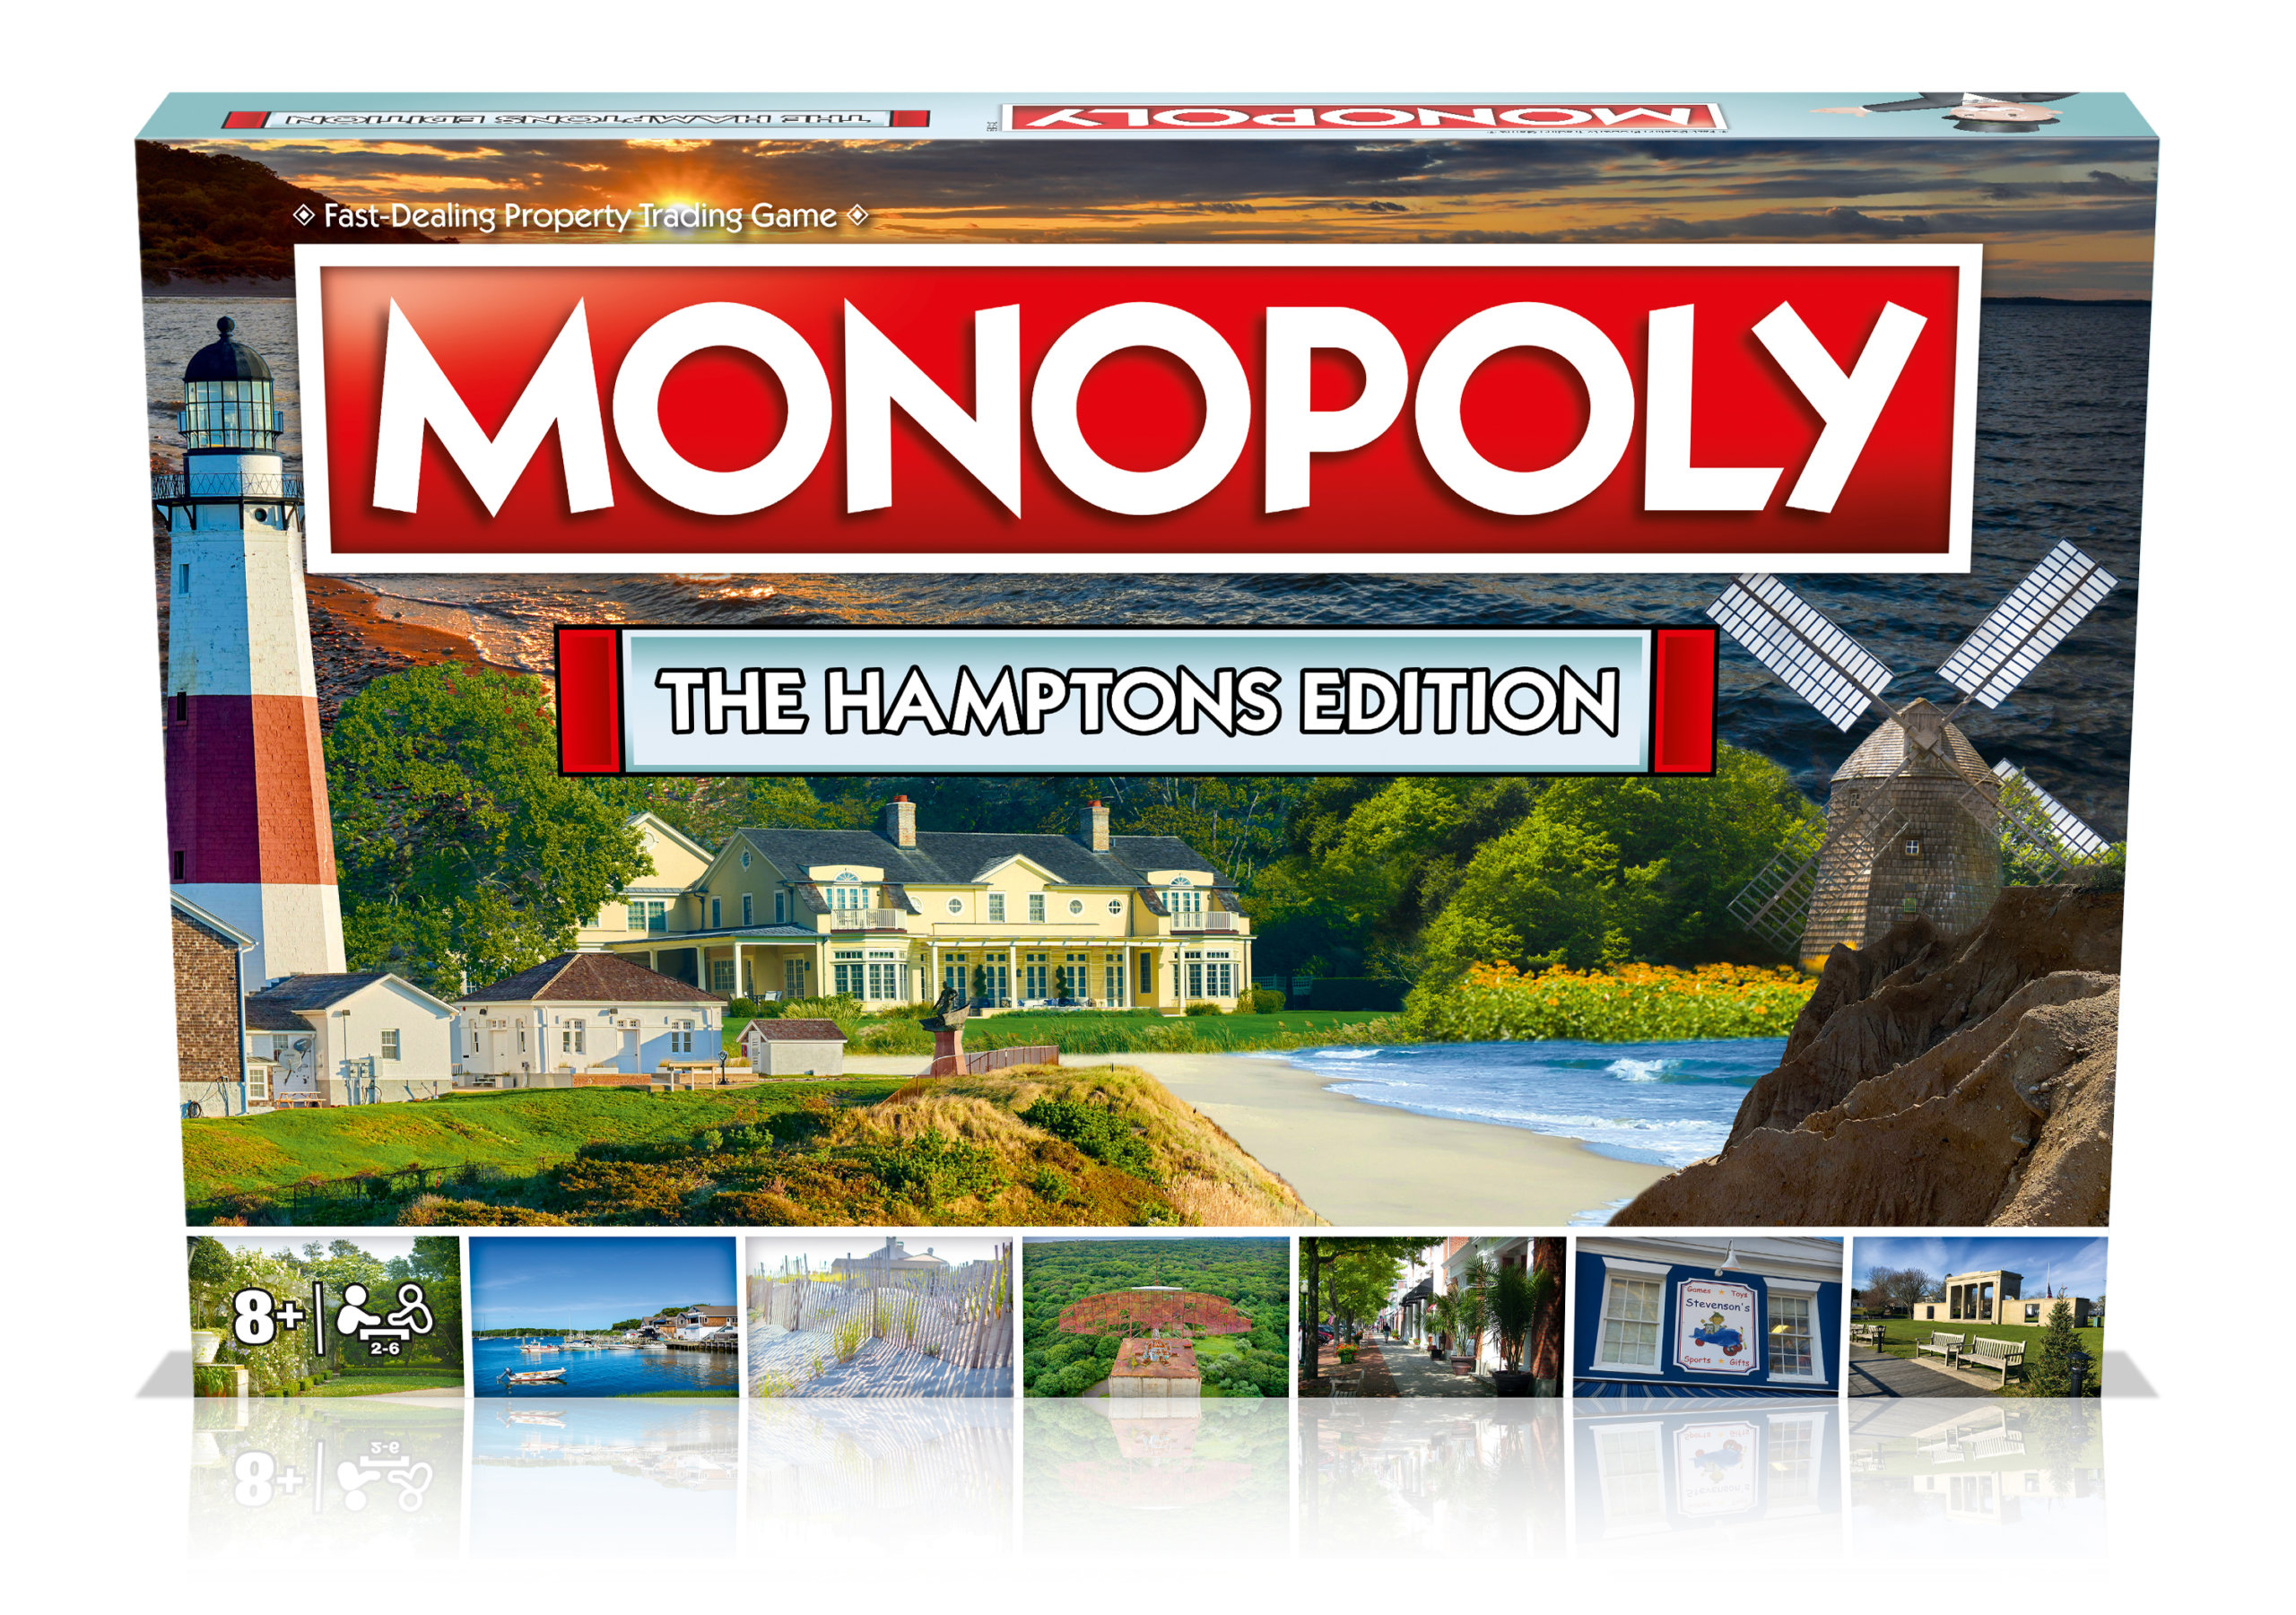 Monopoly The Hamptons Edition box